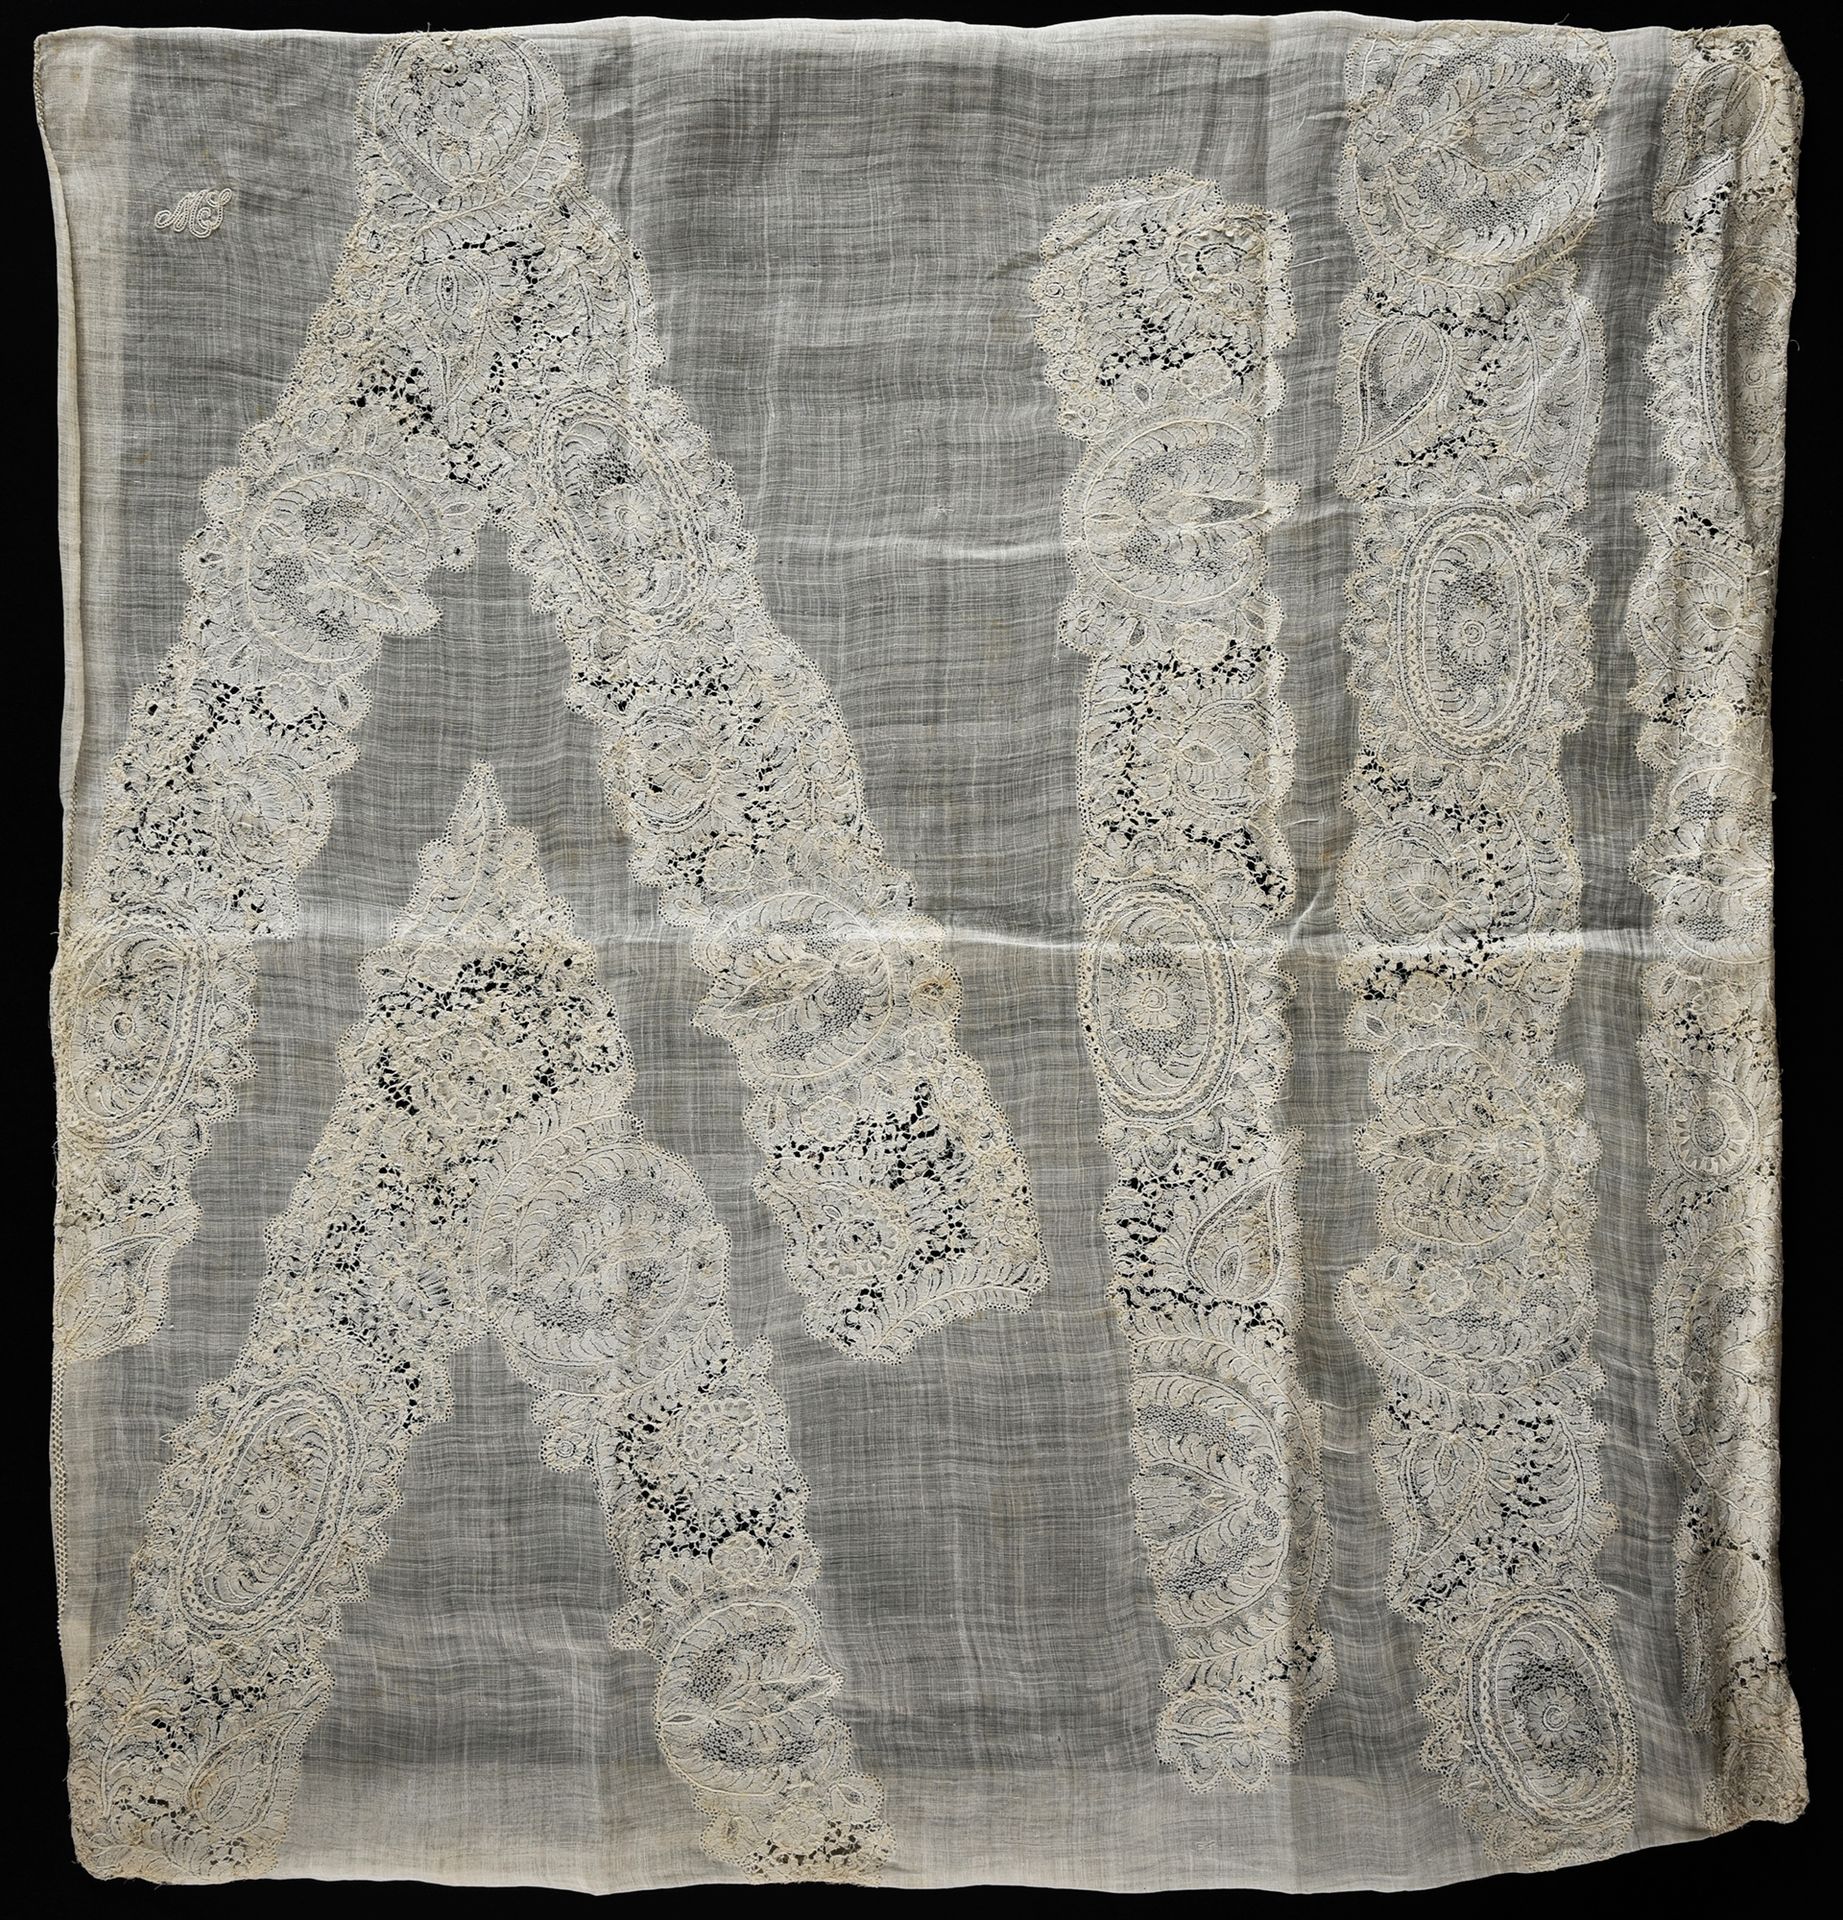 Null 布鲁塞尔花边的枕套，锭子，约1730-40。

枕套在19世纪用手工编织的亚麻布制作，并镶嵌有18世纪上半叶的布鲁塞尔花边。花边上非常精细地镶嵌着土耳&hellip;